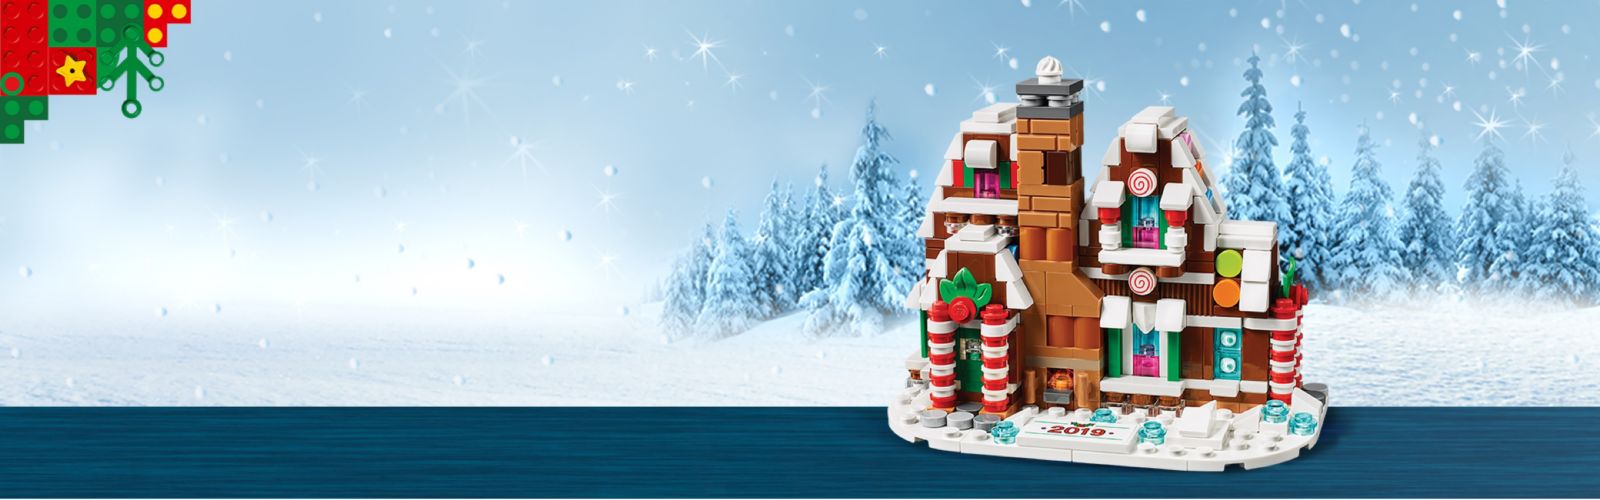 Home Official Lego Shop Gb - application center paragon resorts roblox